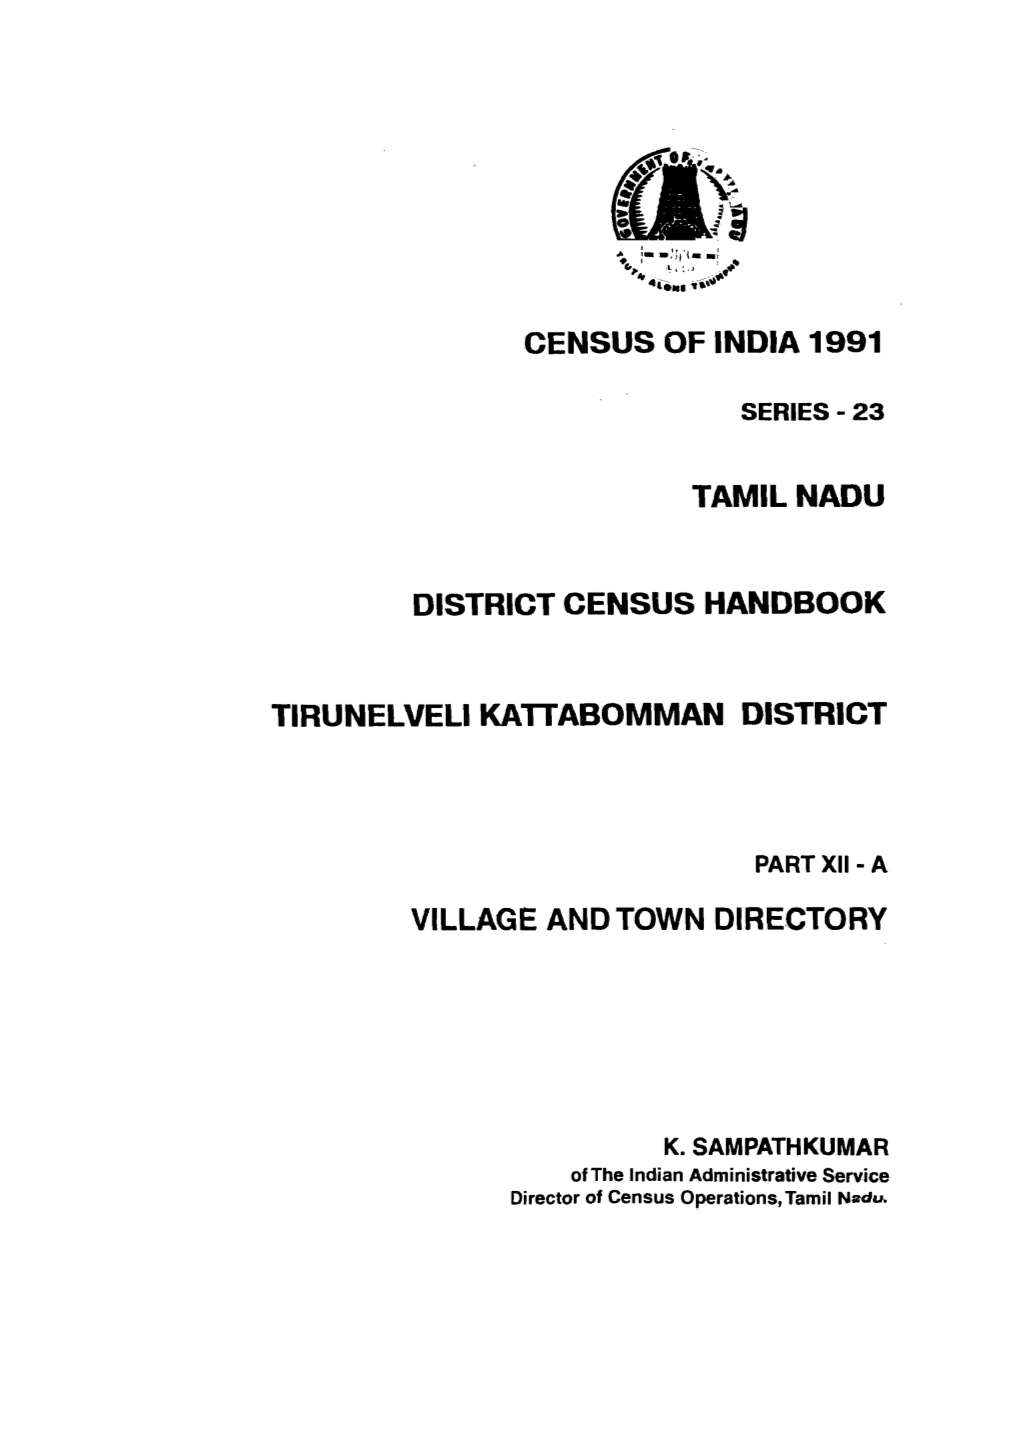 District Census Handbook, Tirunelveli Kattabomman, Part XII-A, Series-23